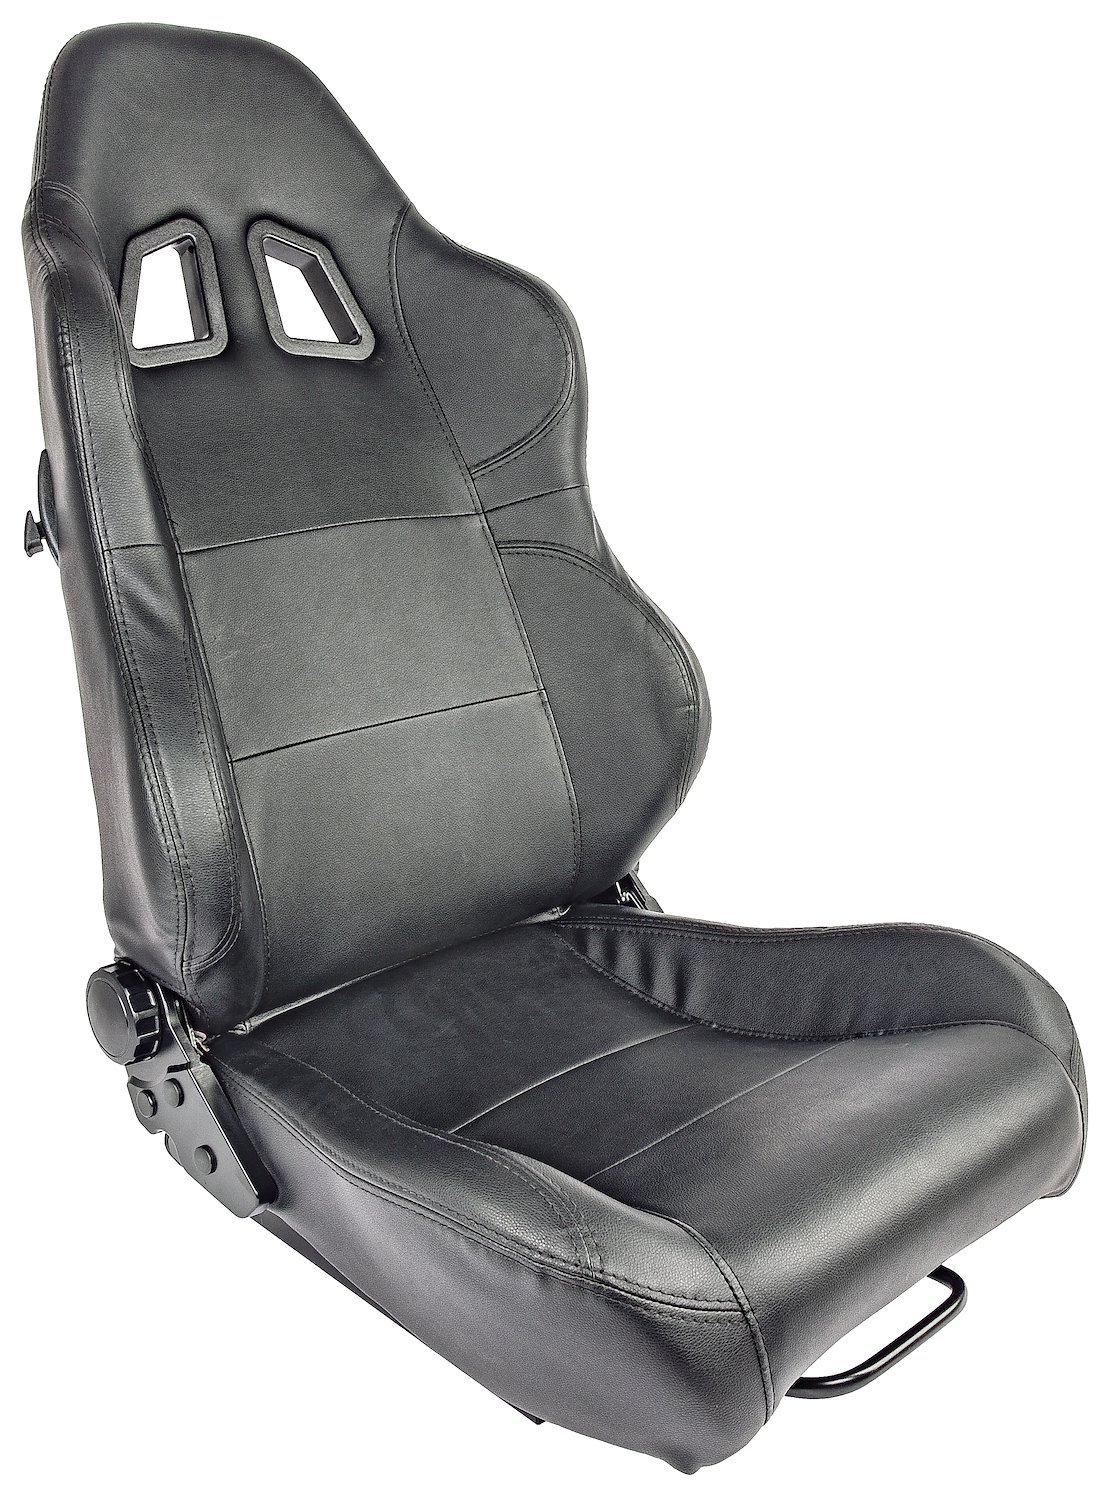 GS-1 High Back Sport Seat Driver or Passenger Side Black